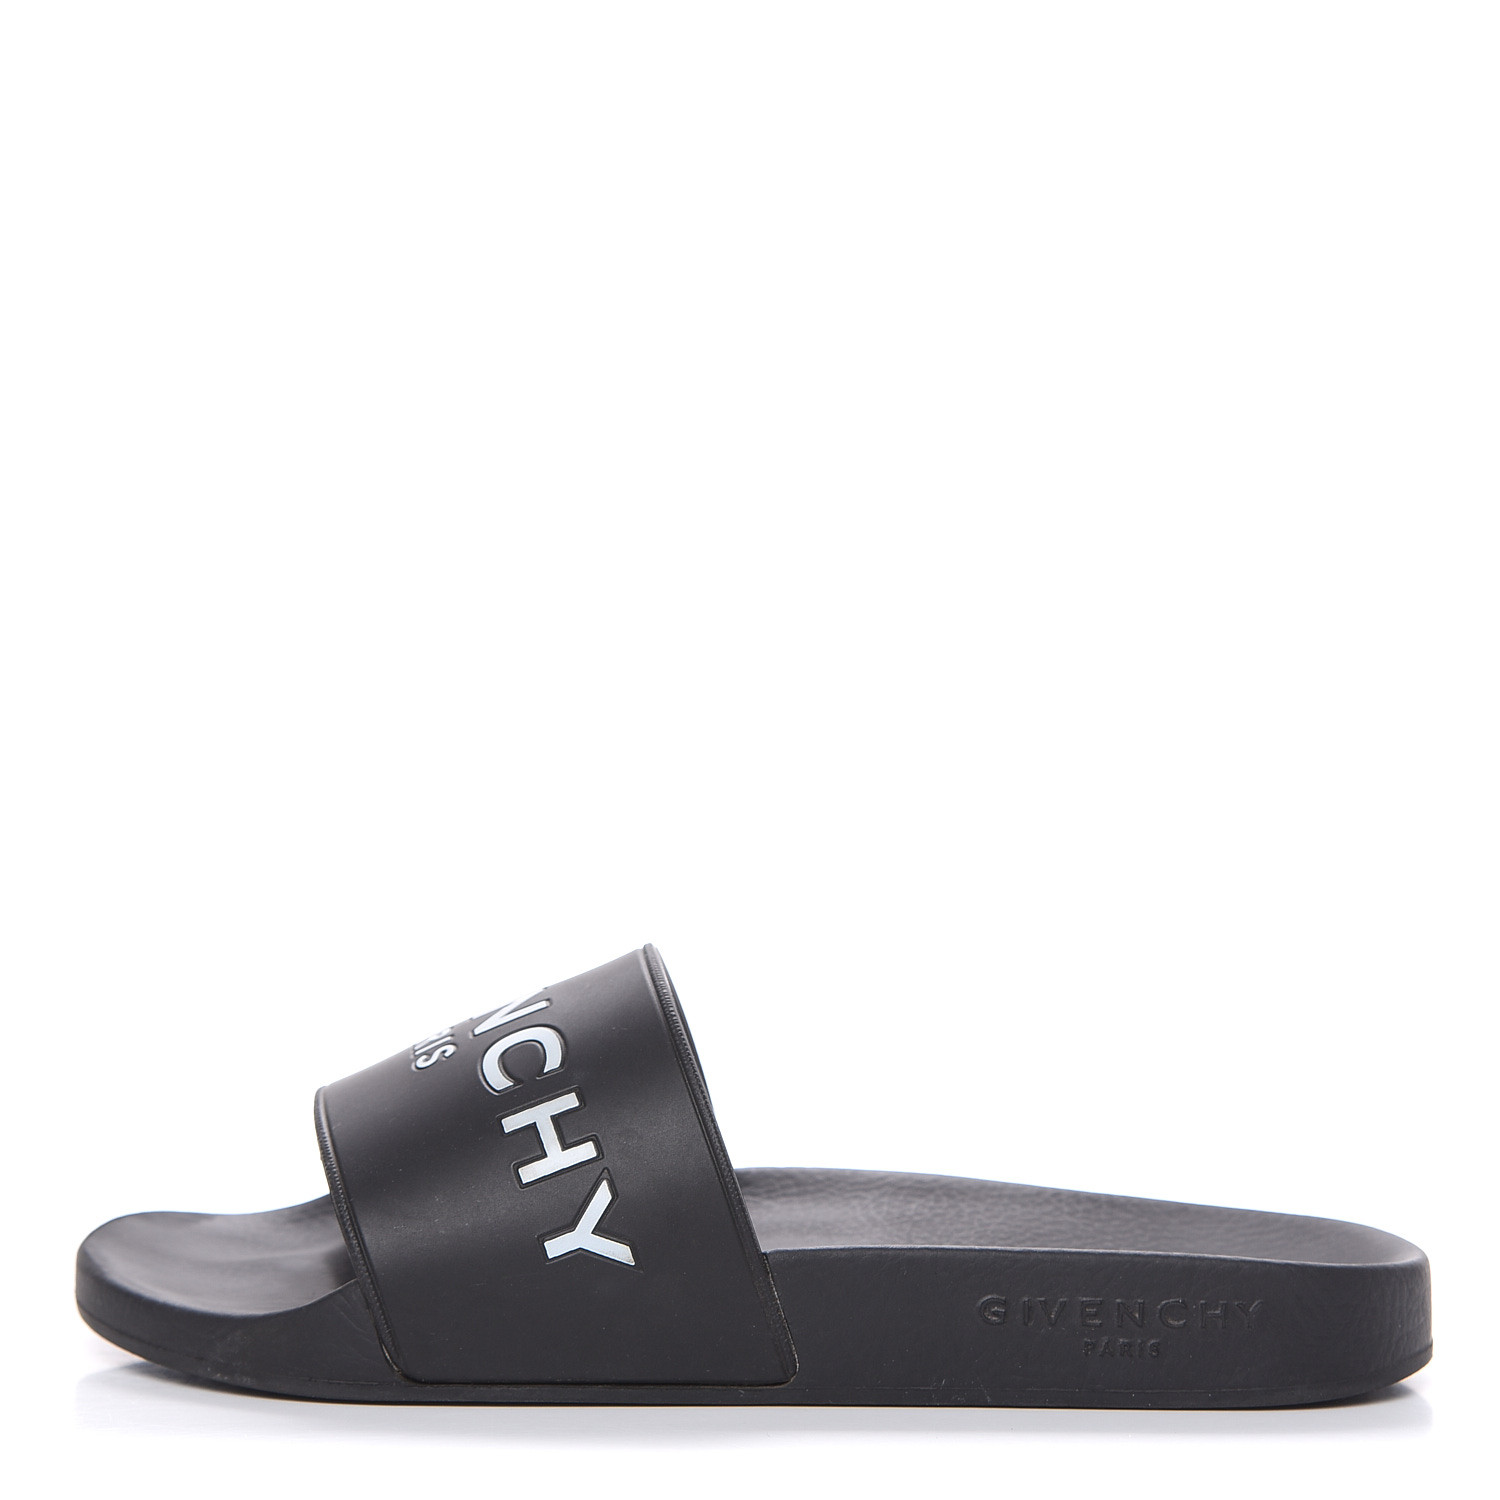 GIVENCHY Rubber Logo Womens Pool Slides Sandals 36 Black 499040